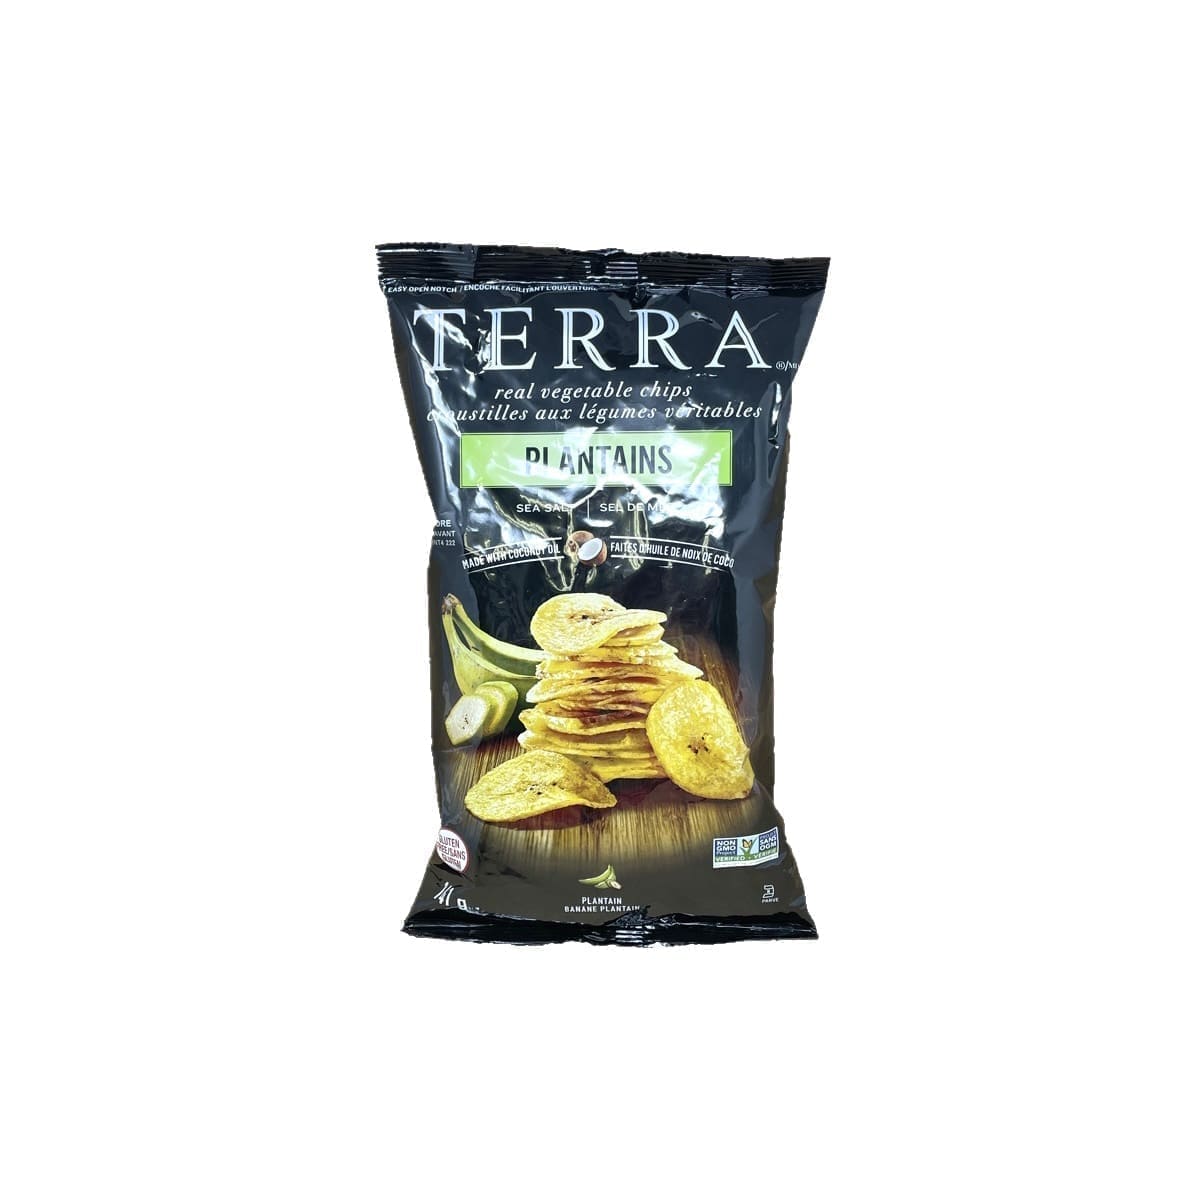 Terra Real Vegetable Chips Plantains Sea Salt (141g)